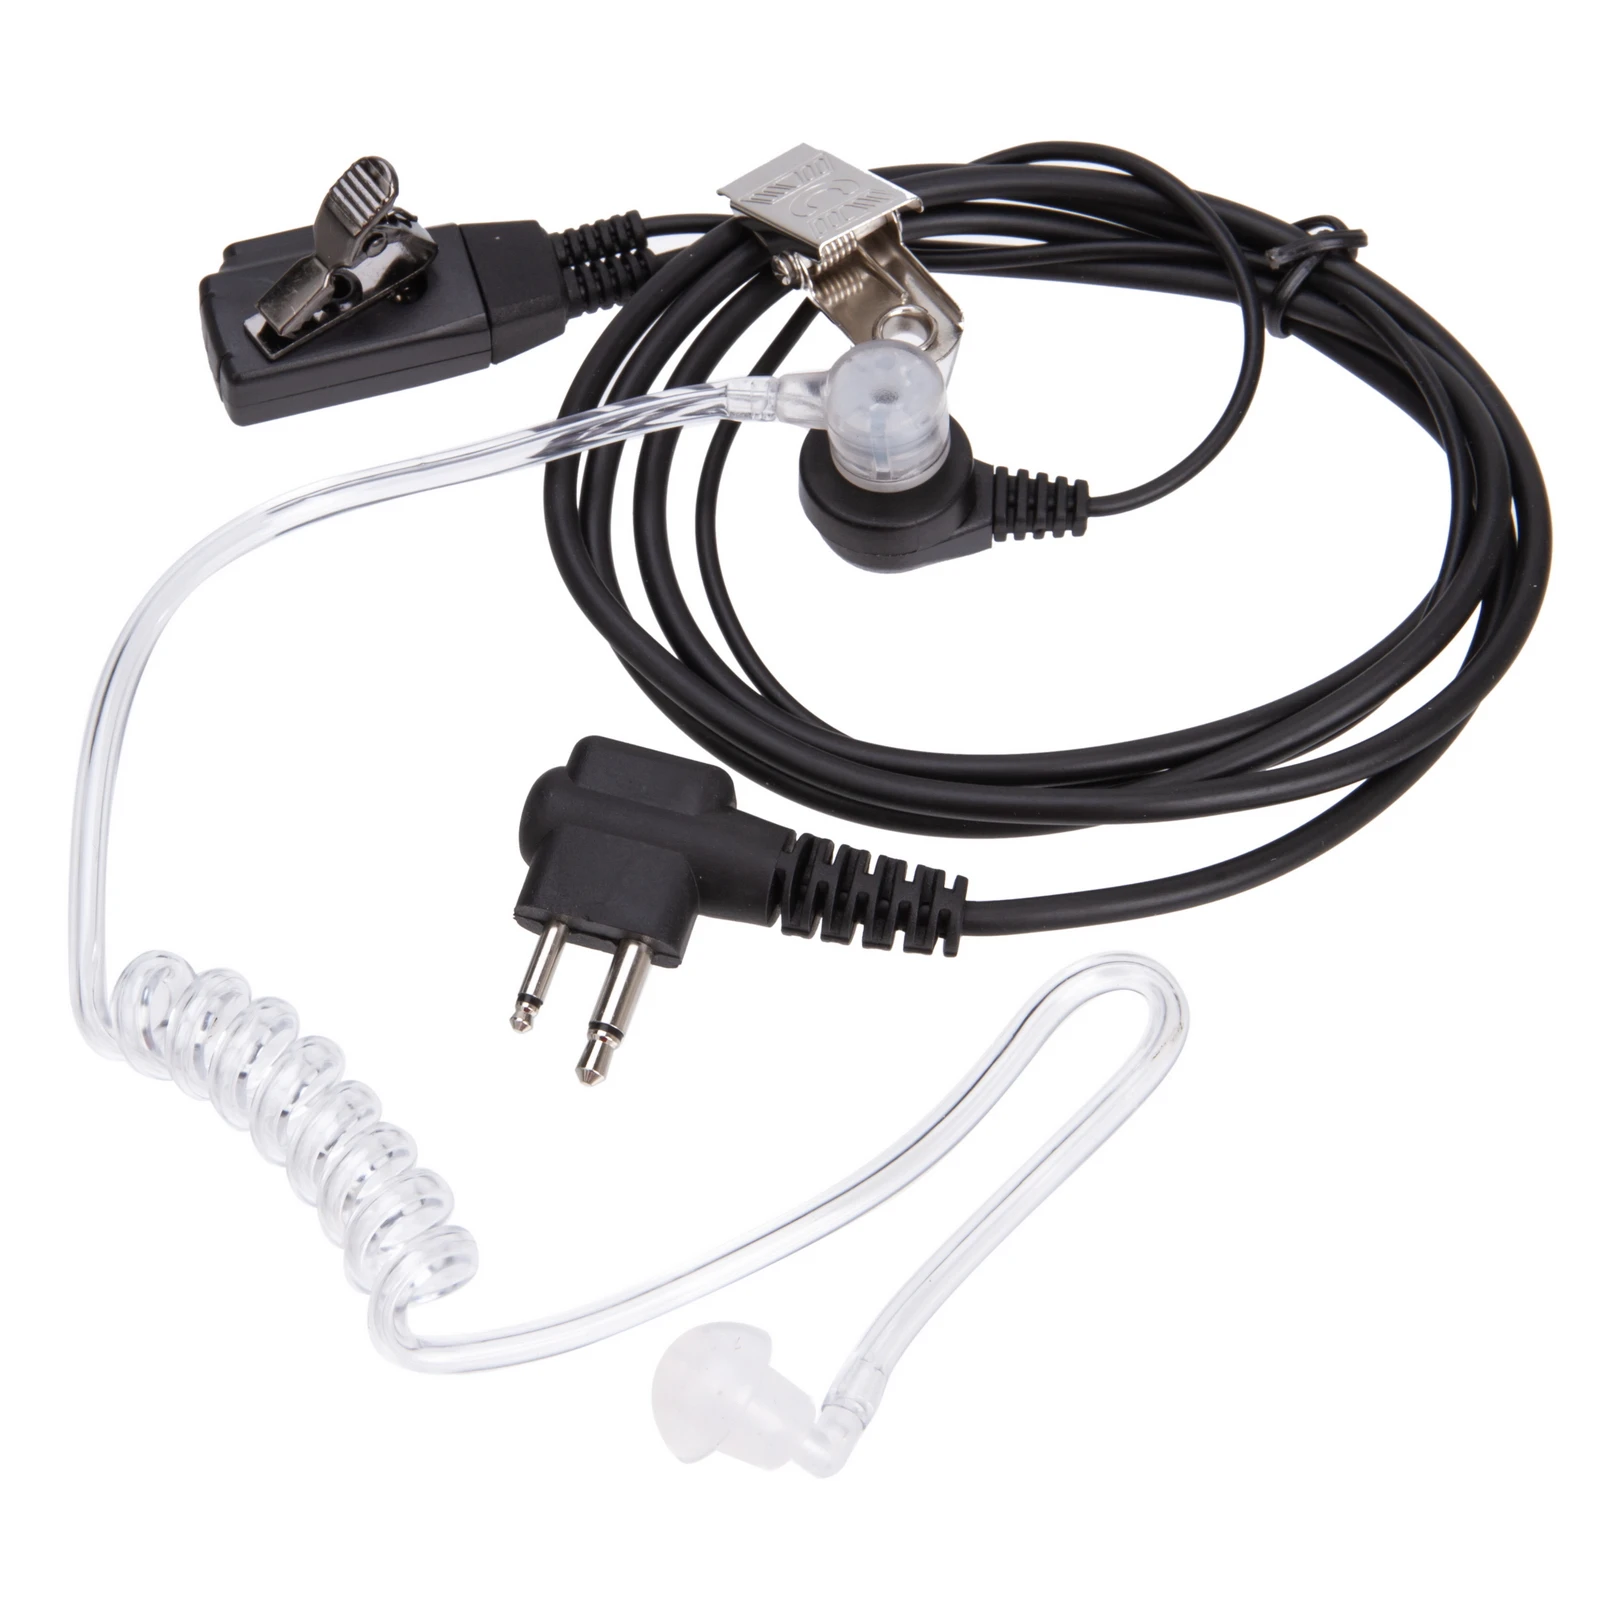 2 Pin Covert Acoustic Tube Earpiece Headset Mic for MOTOROLA GP300/308/68/88/88s/100/150/200 DEP450 Two Way Radio